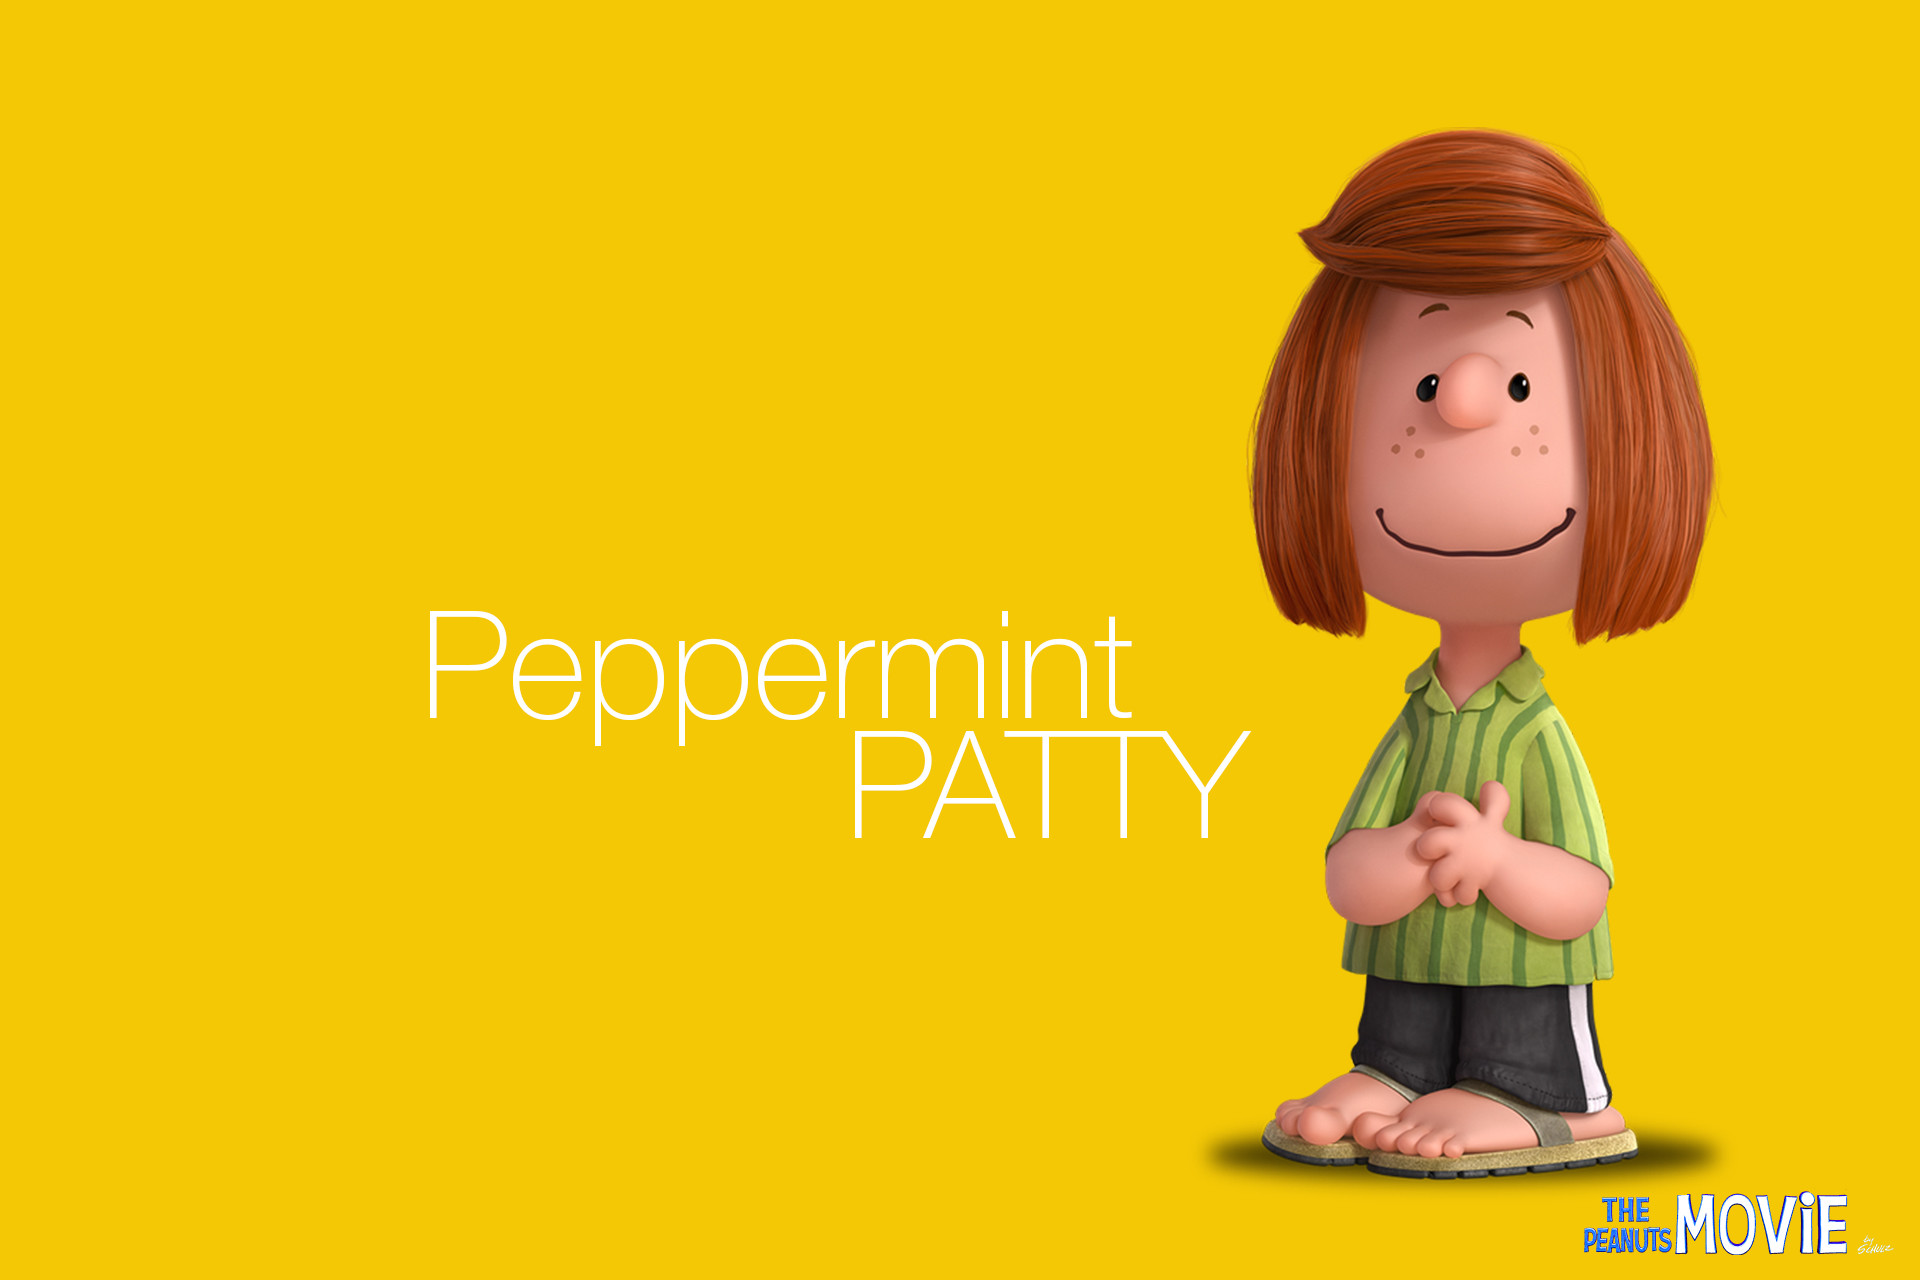 Belle isle peppermint patty